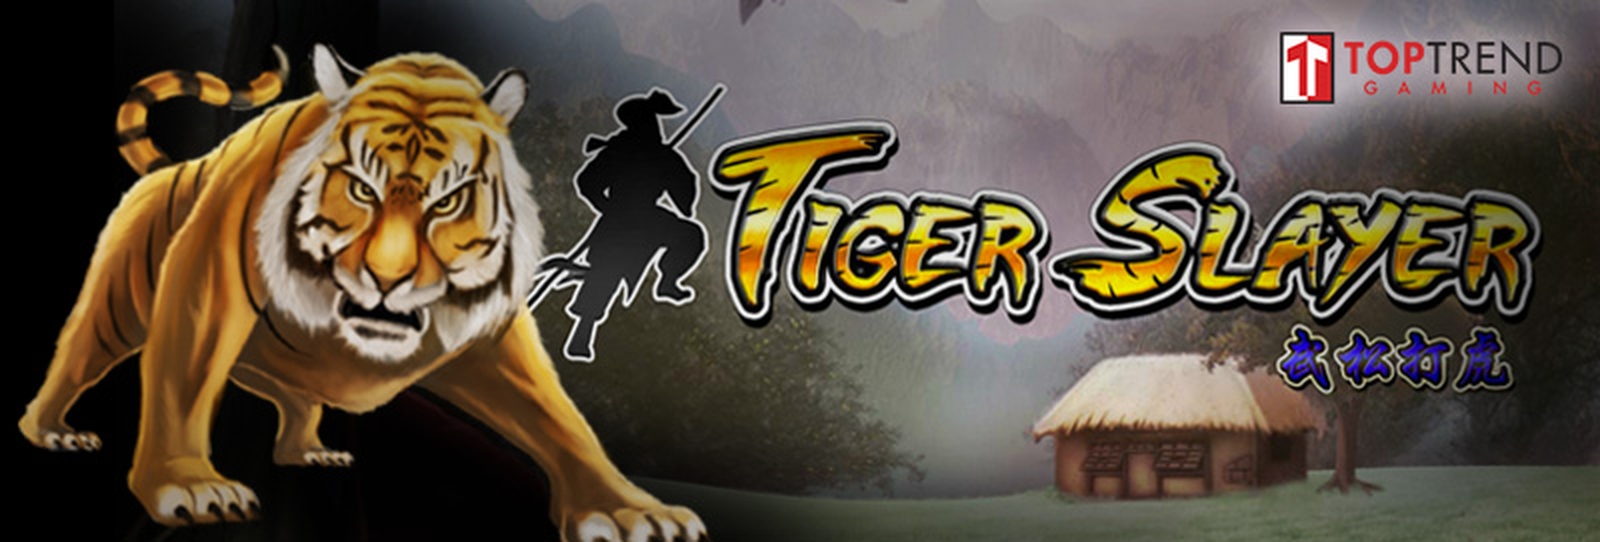 Tiger Slayer demo